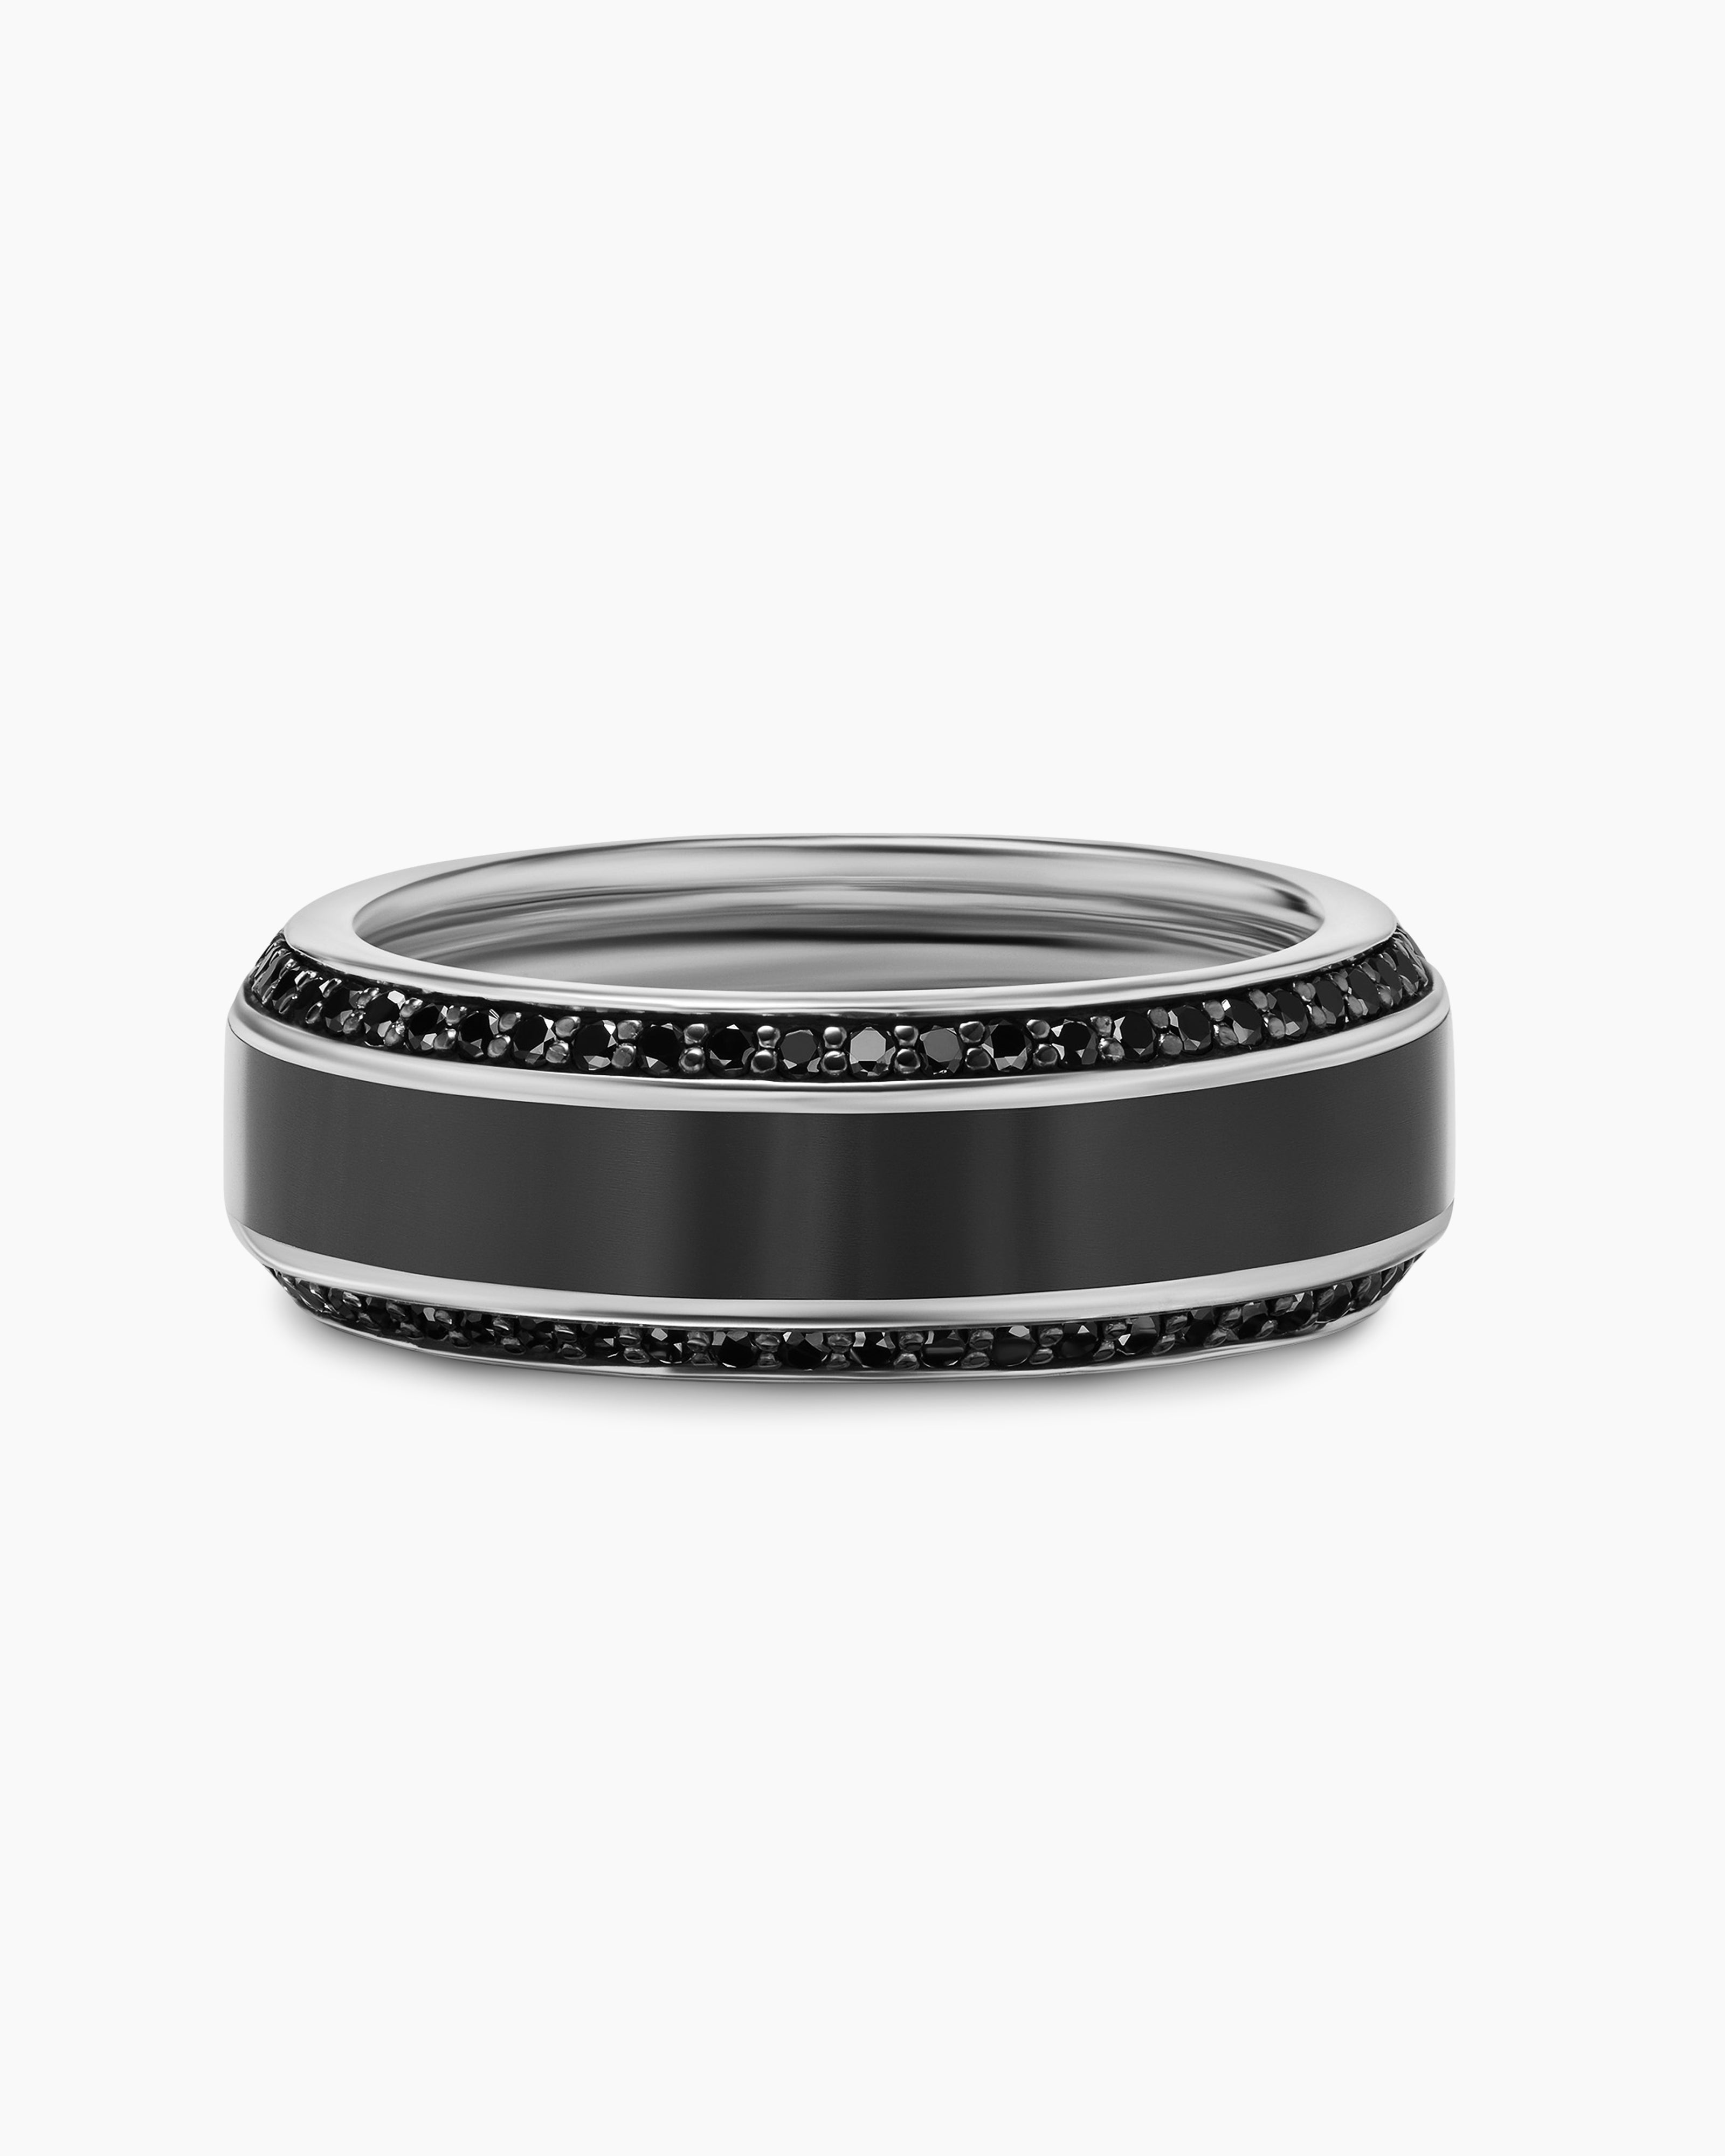 5ct Emeral Cut Diamond Bezel Engagement Ring from Black Diamonds New York